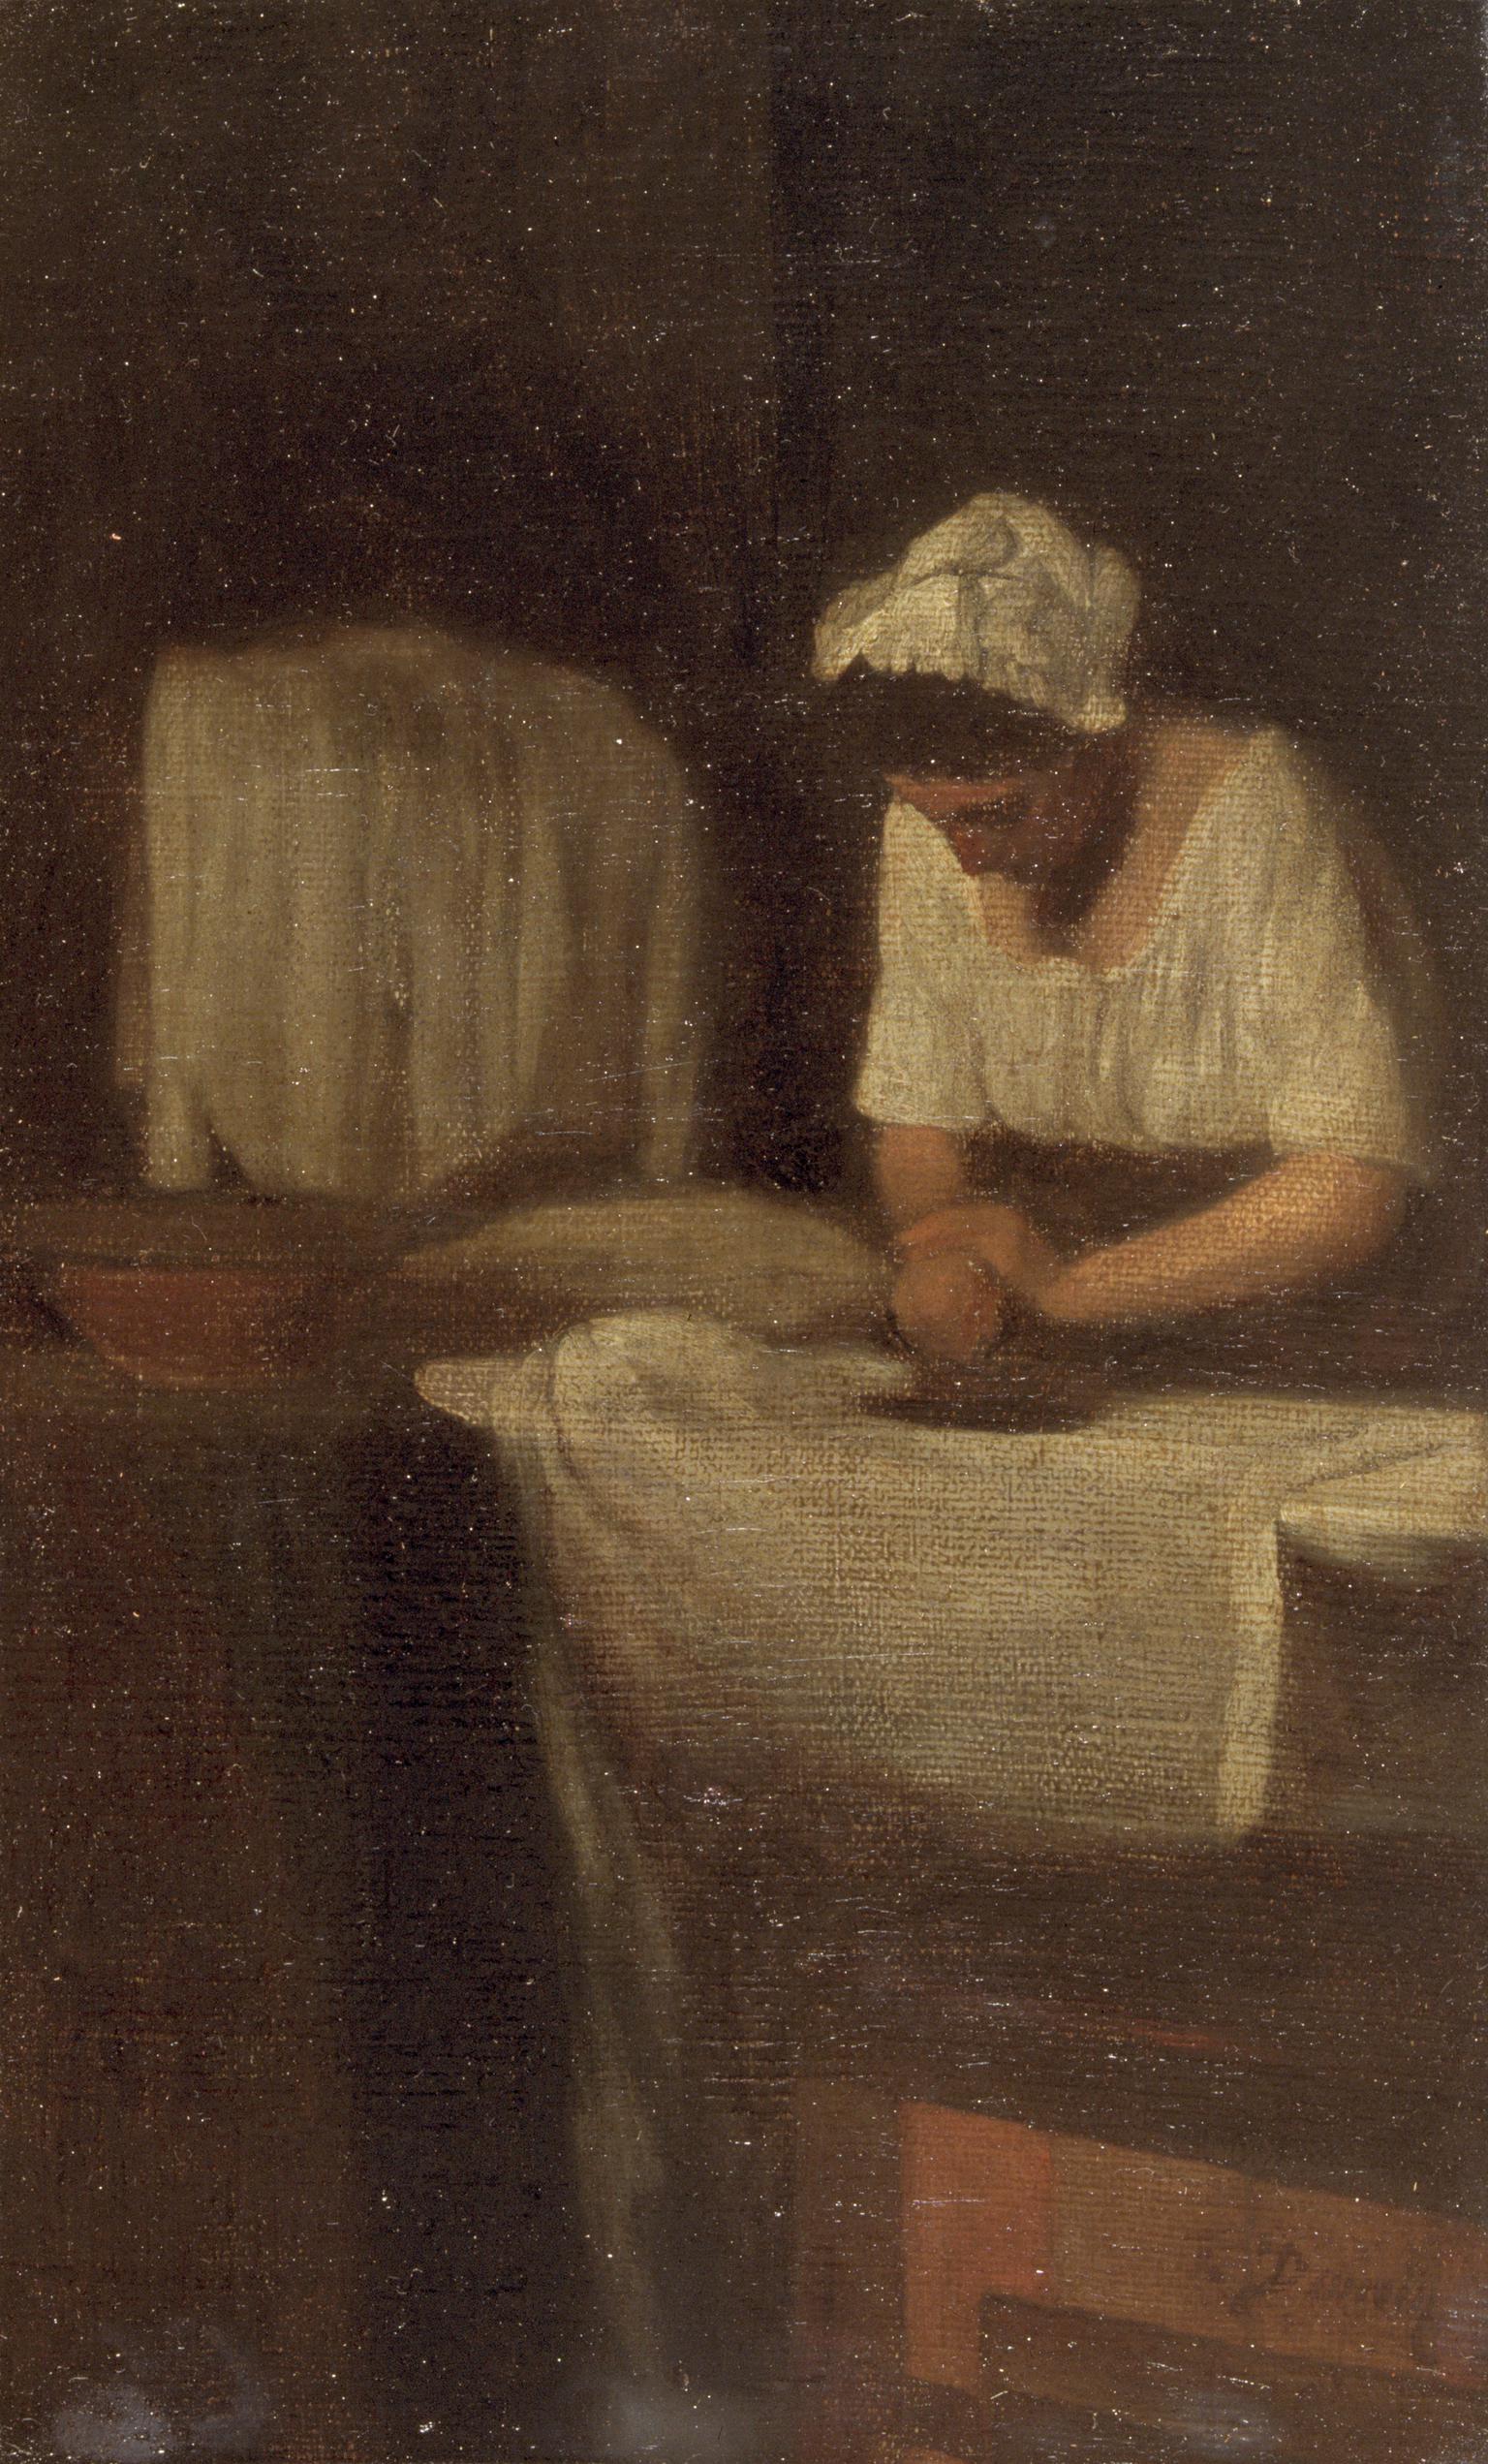 The laundress